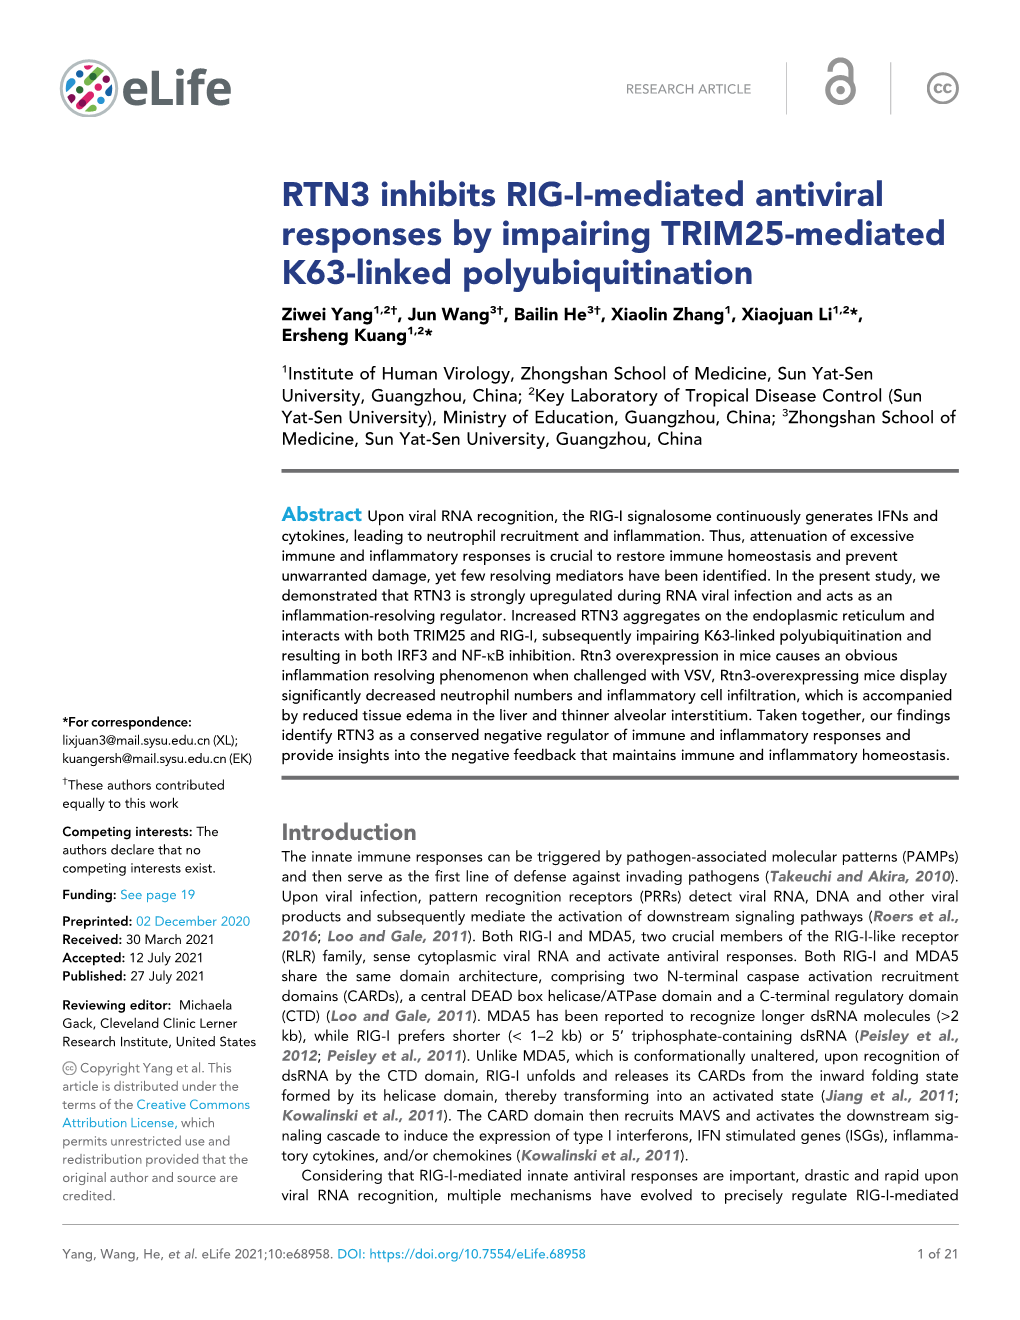 RTN3 Inhibits RIG-I-Mediated Antiviral Responses by Impairing TRIM25